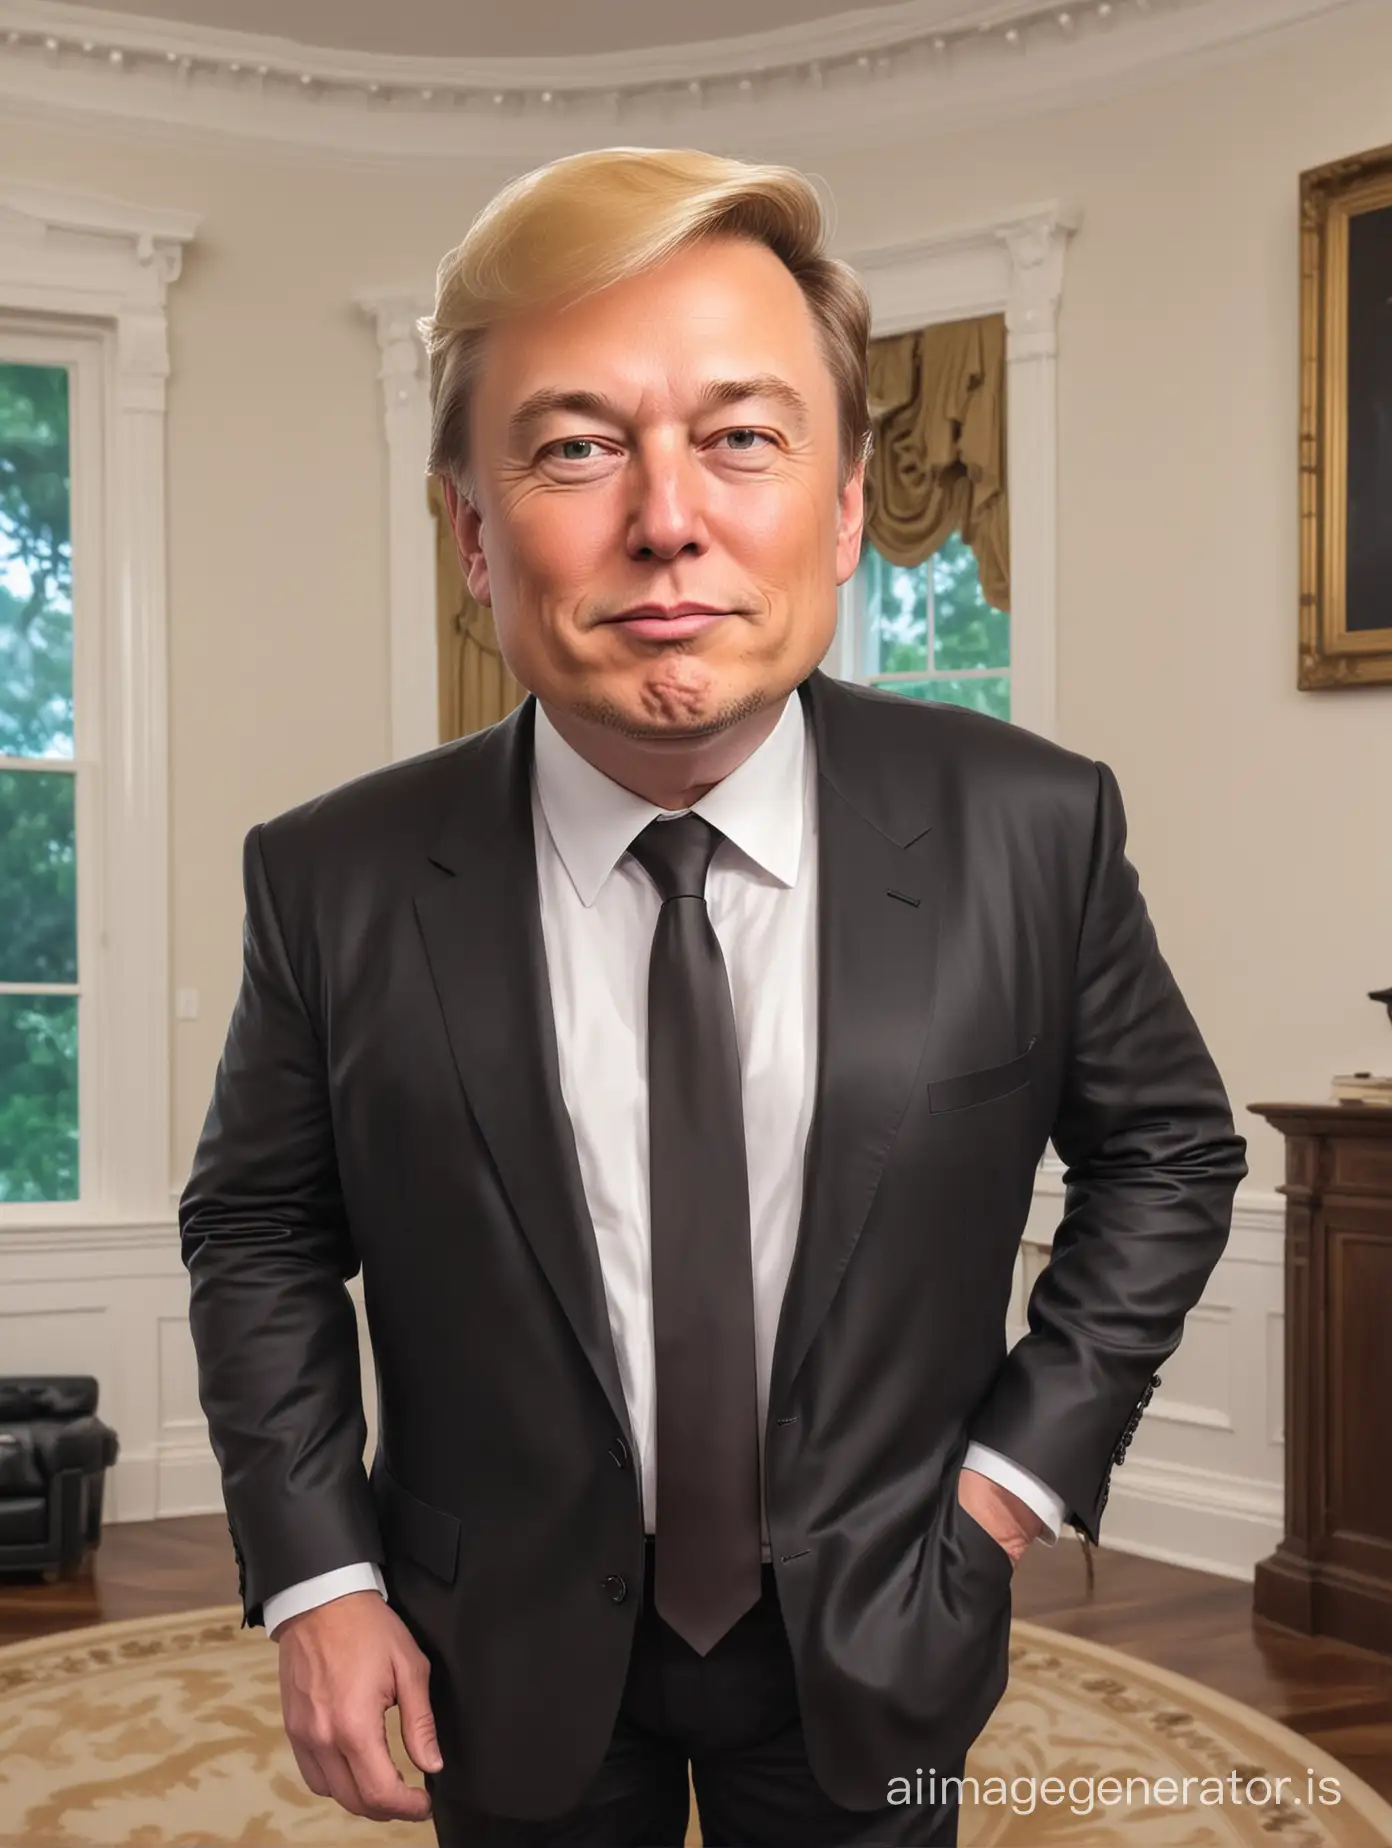 Elon-Musk-Cartoon-Caricature-Inside-White-House-with-Trumps-Hair